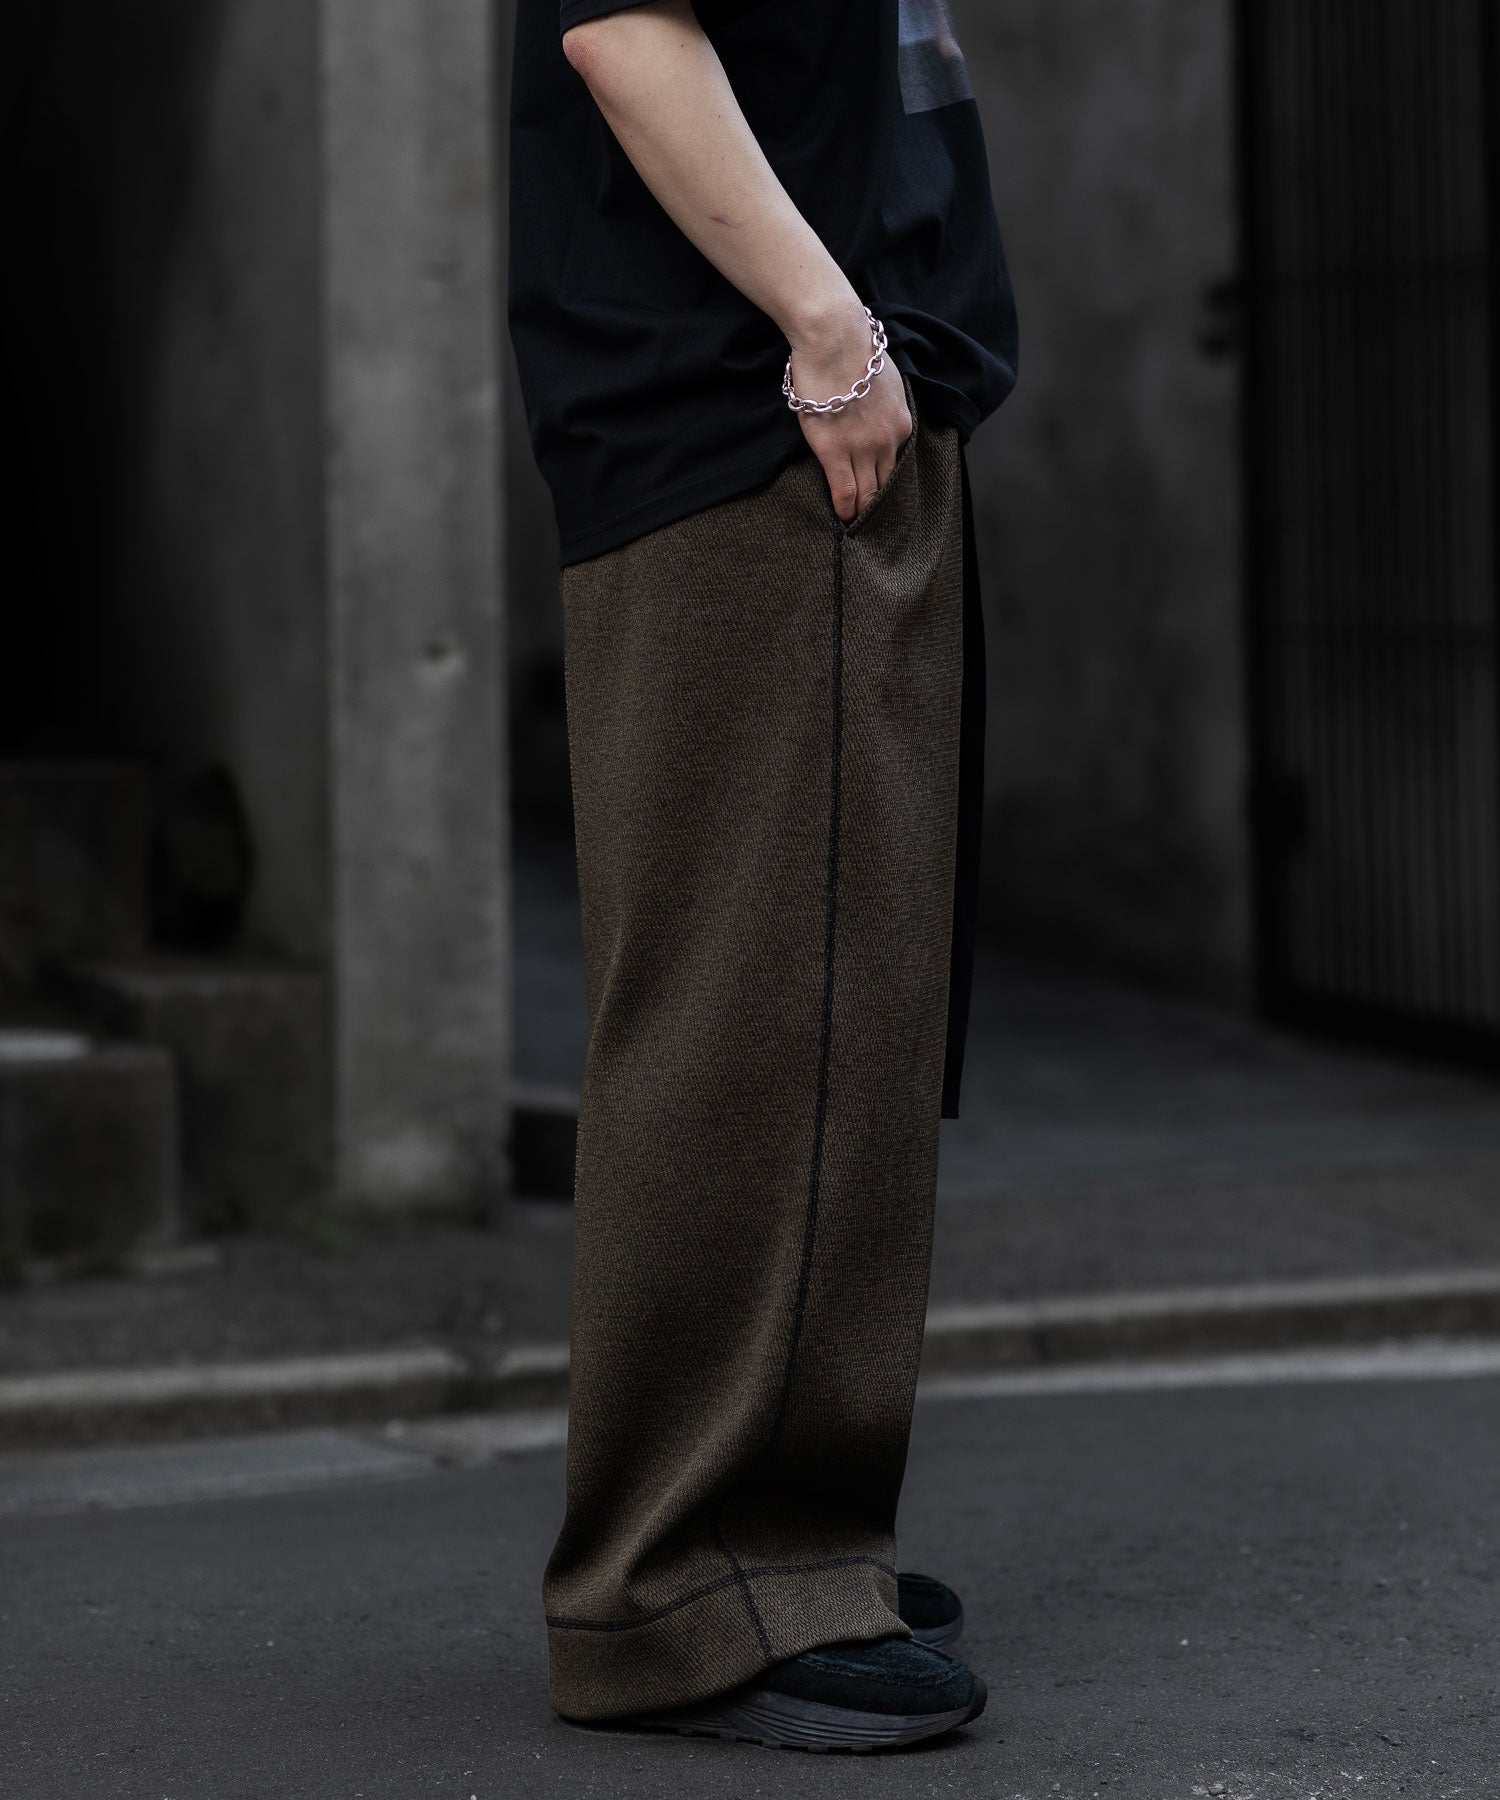 【 i'm here 】アイムヒアーのPOLY/THERMAR : EASY PANTS - KHAKI 公式通販サイトsession福岡セレクトショップ